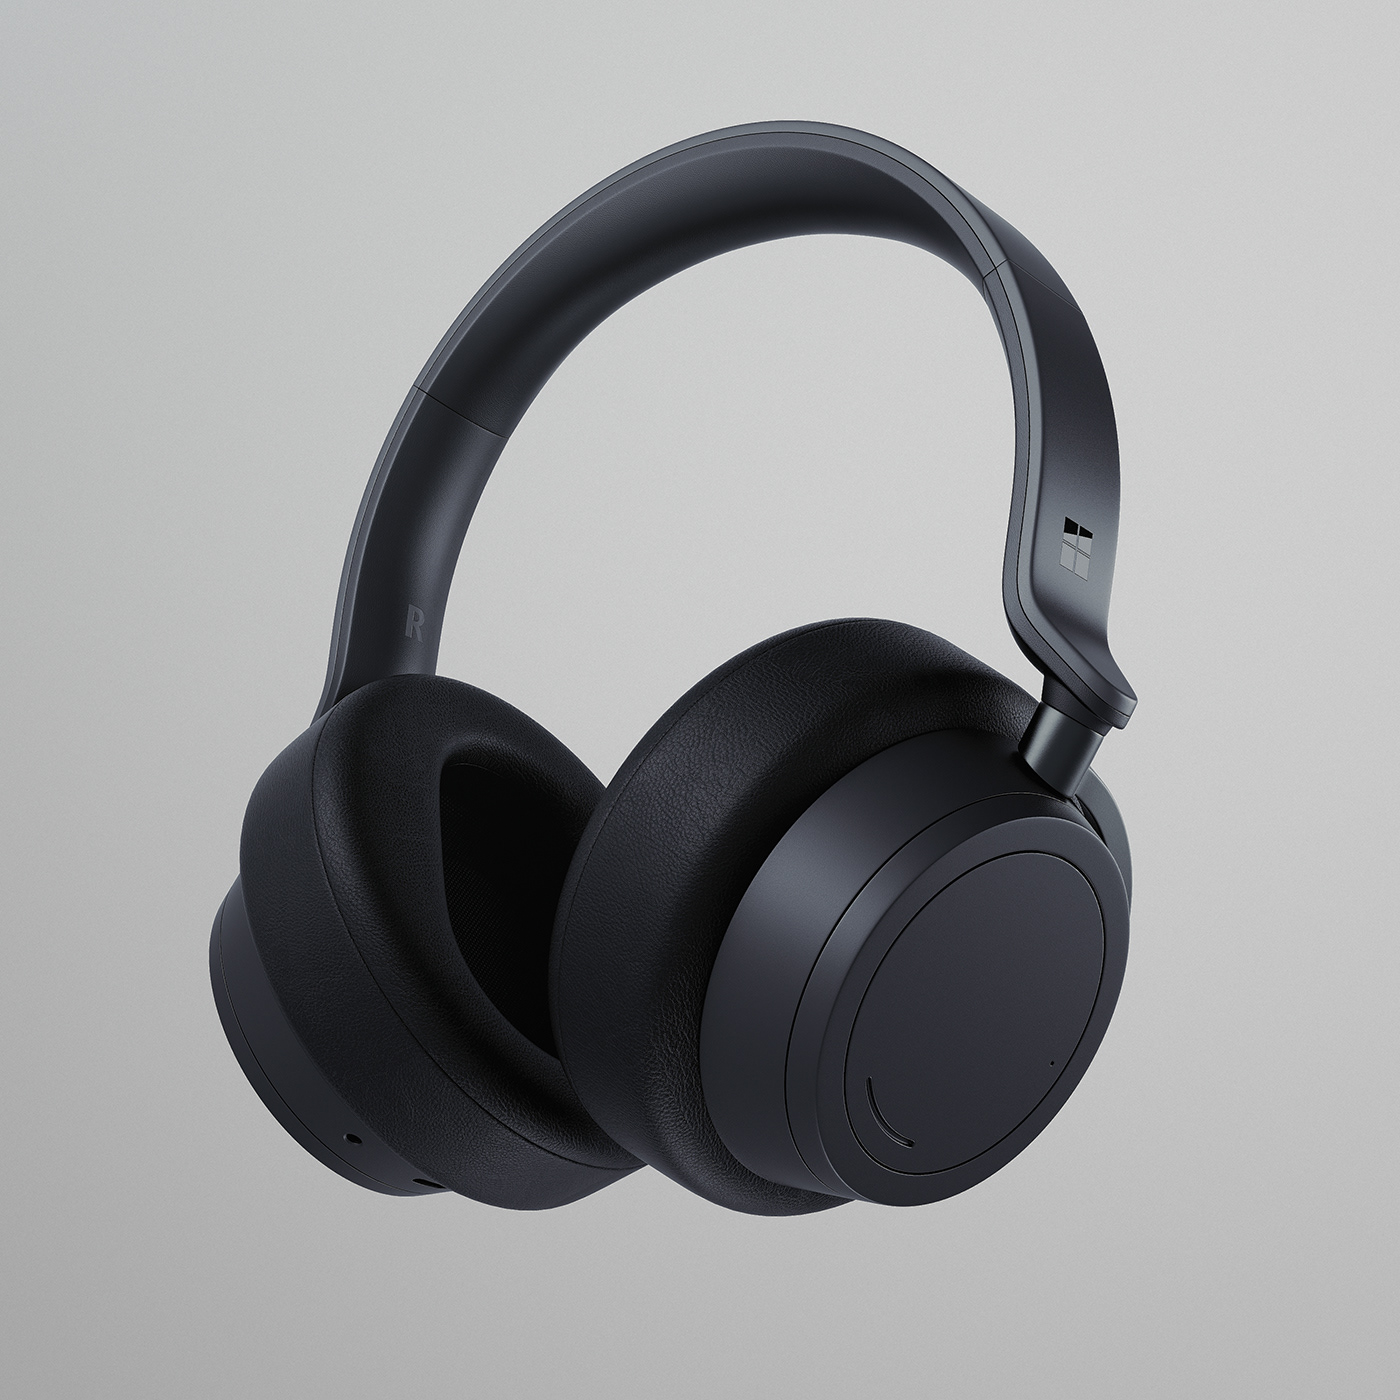 3D CGI design headphones lighting Microsoft minimal octane product render surface